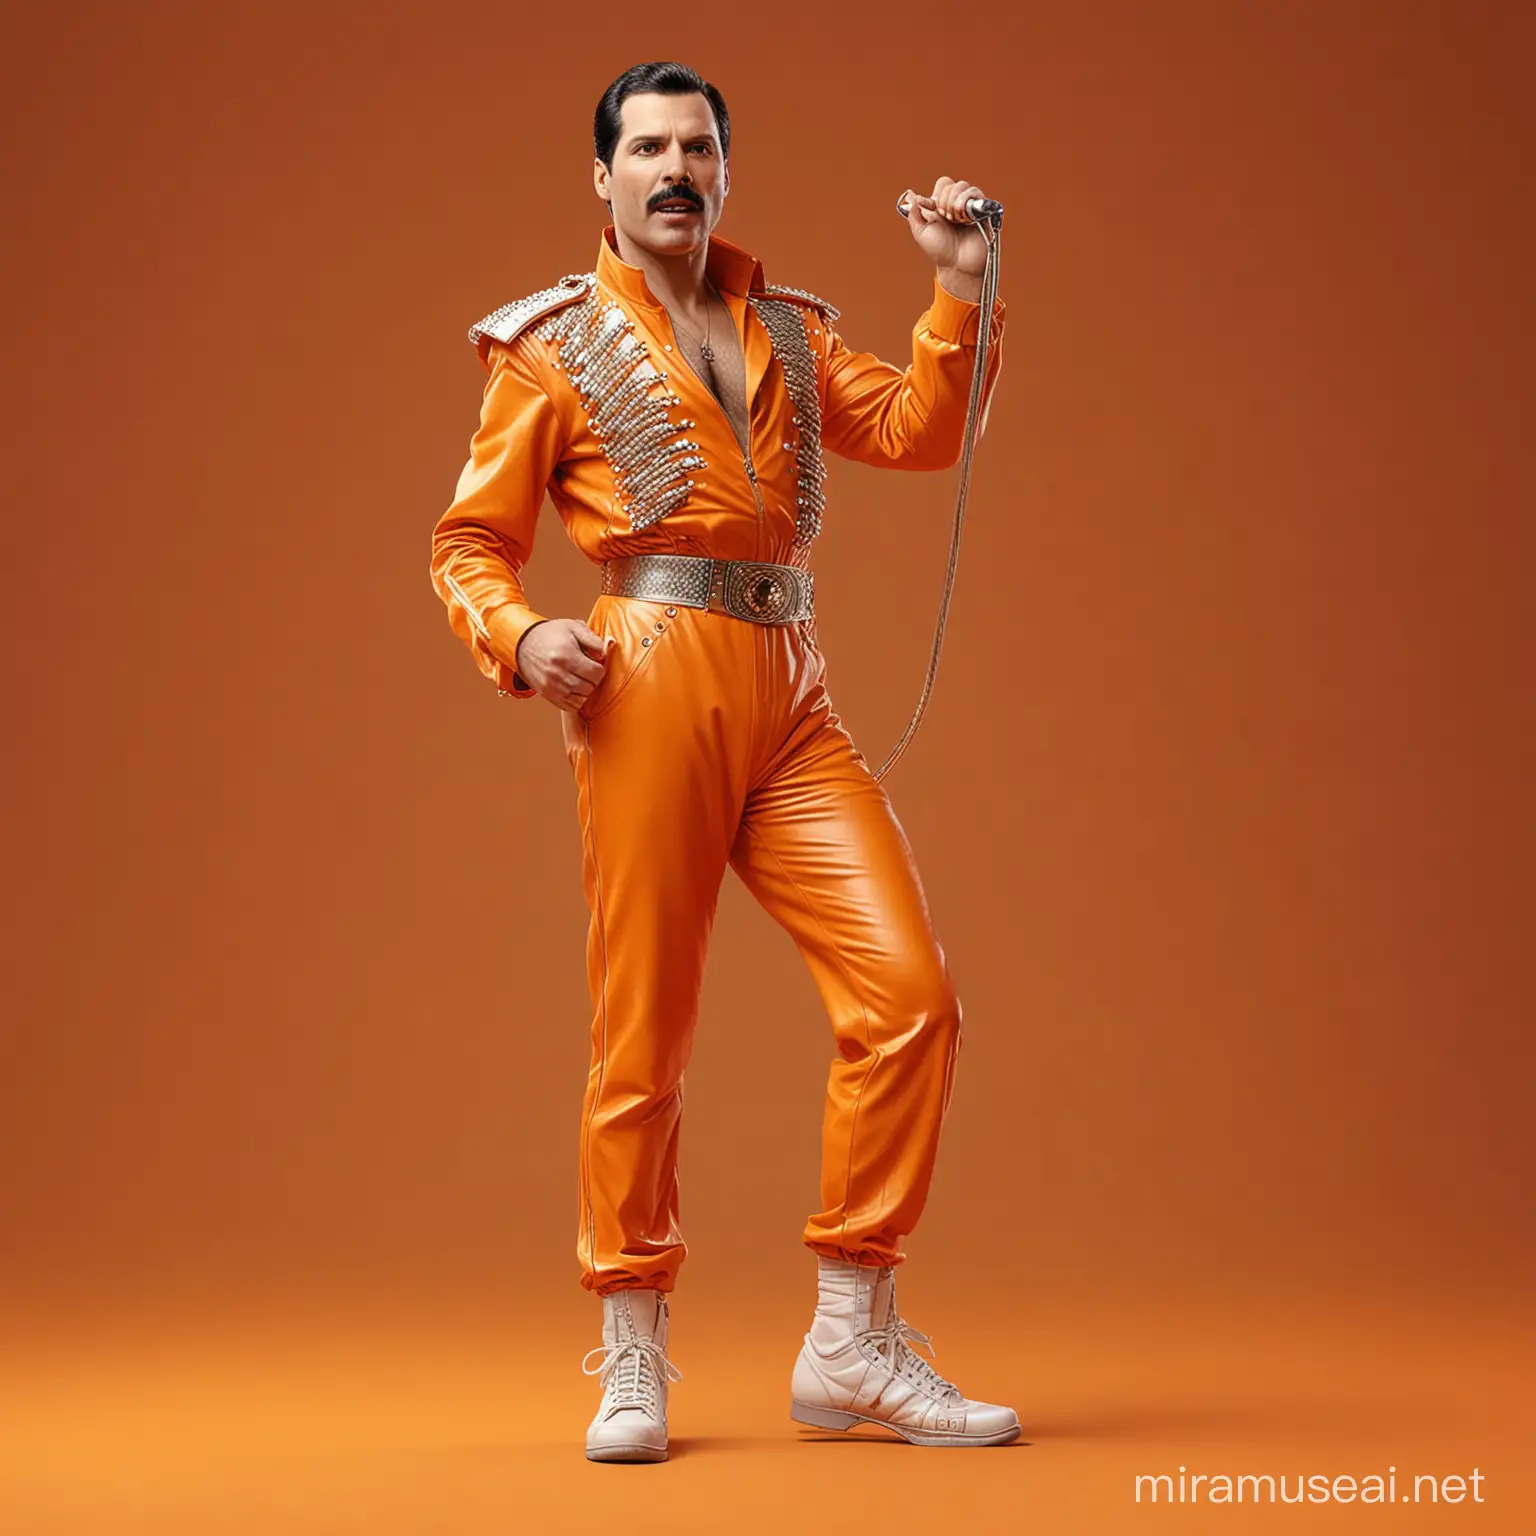 Freddie Mercury FullHeight Portrait Vibrant Orange Background in Cinematic Realism